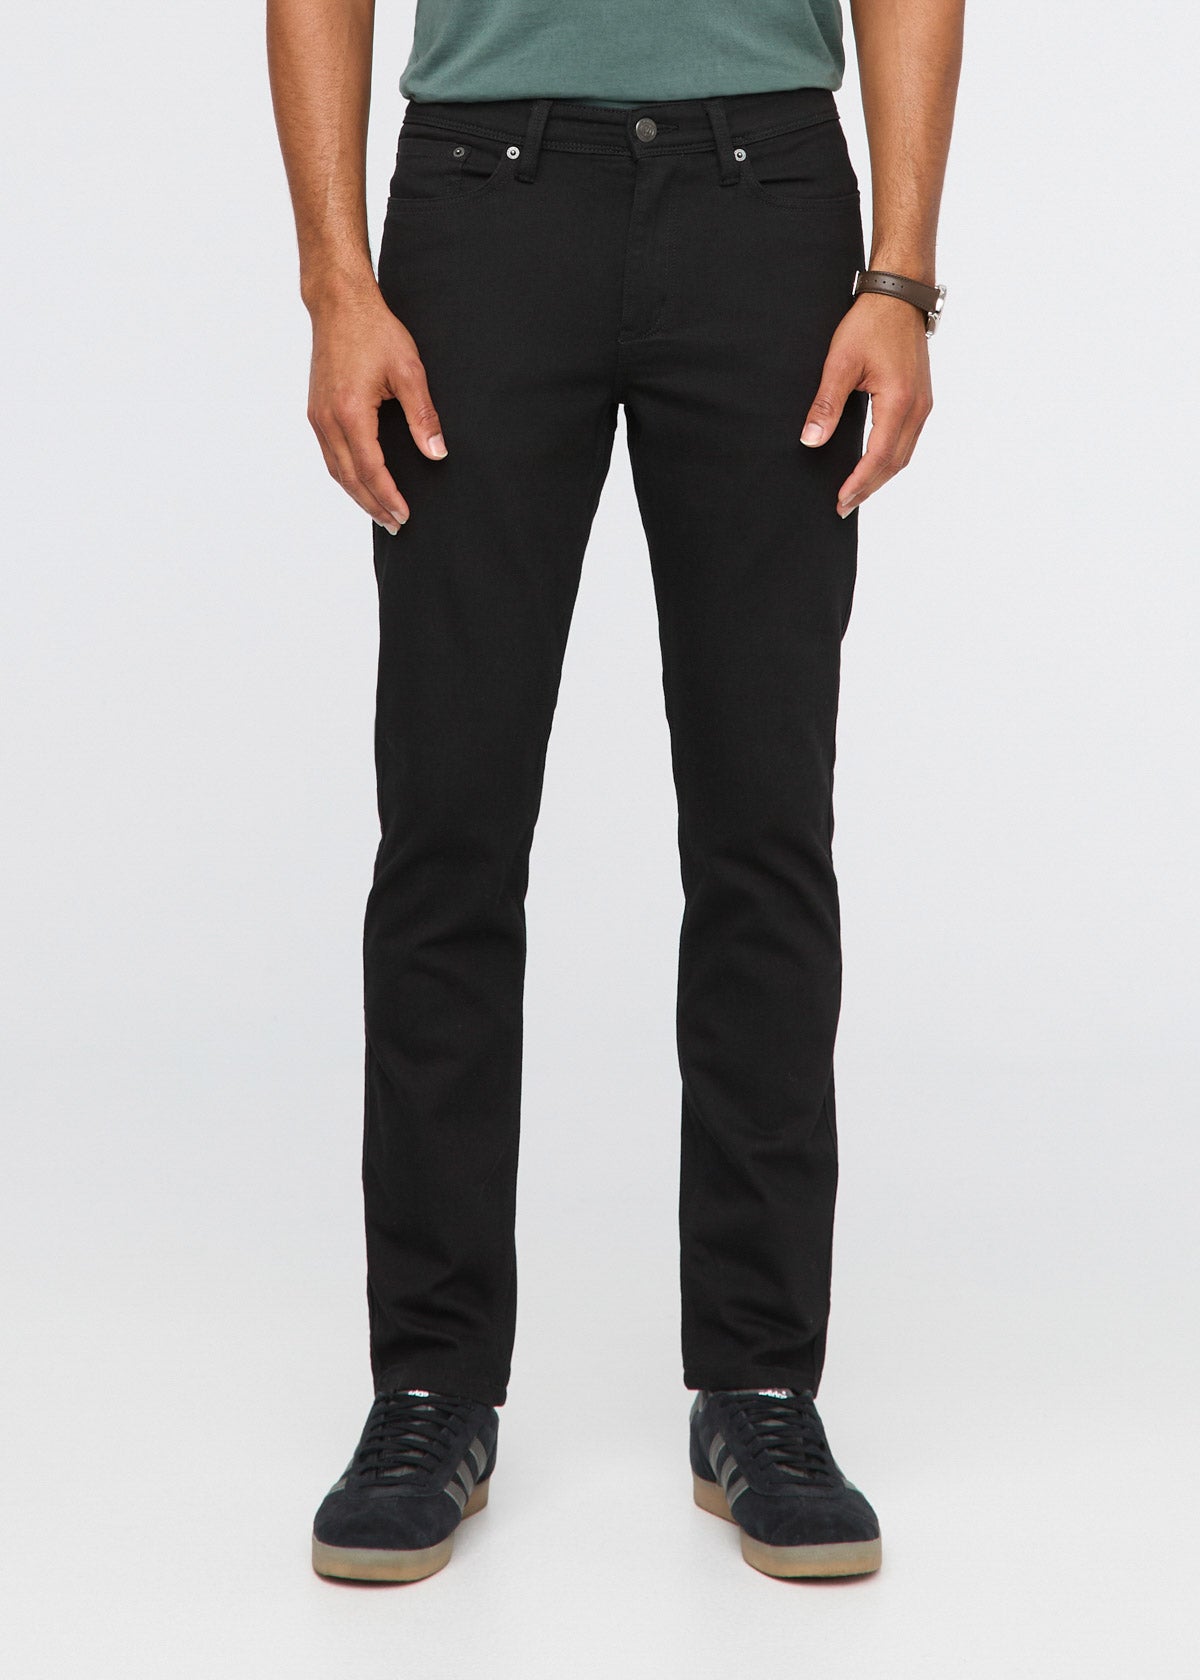 black slim fit stretch jeans front